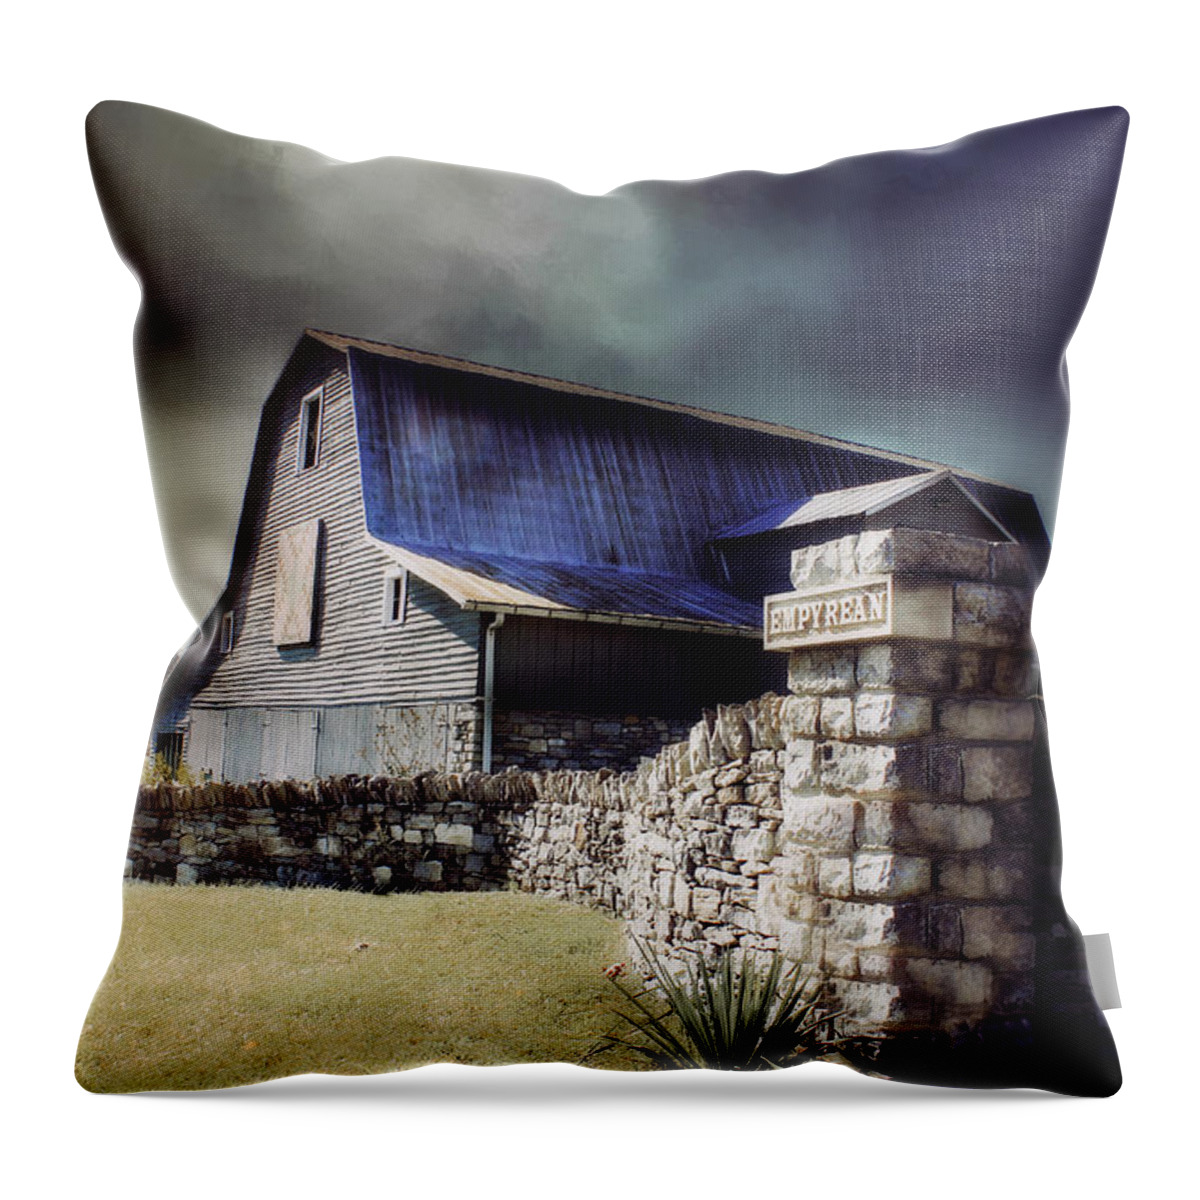 #barn Throw Pillow featuring the photograph Empyrean Estate stone wall by Julie Hamilton